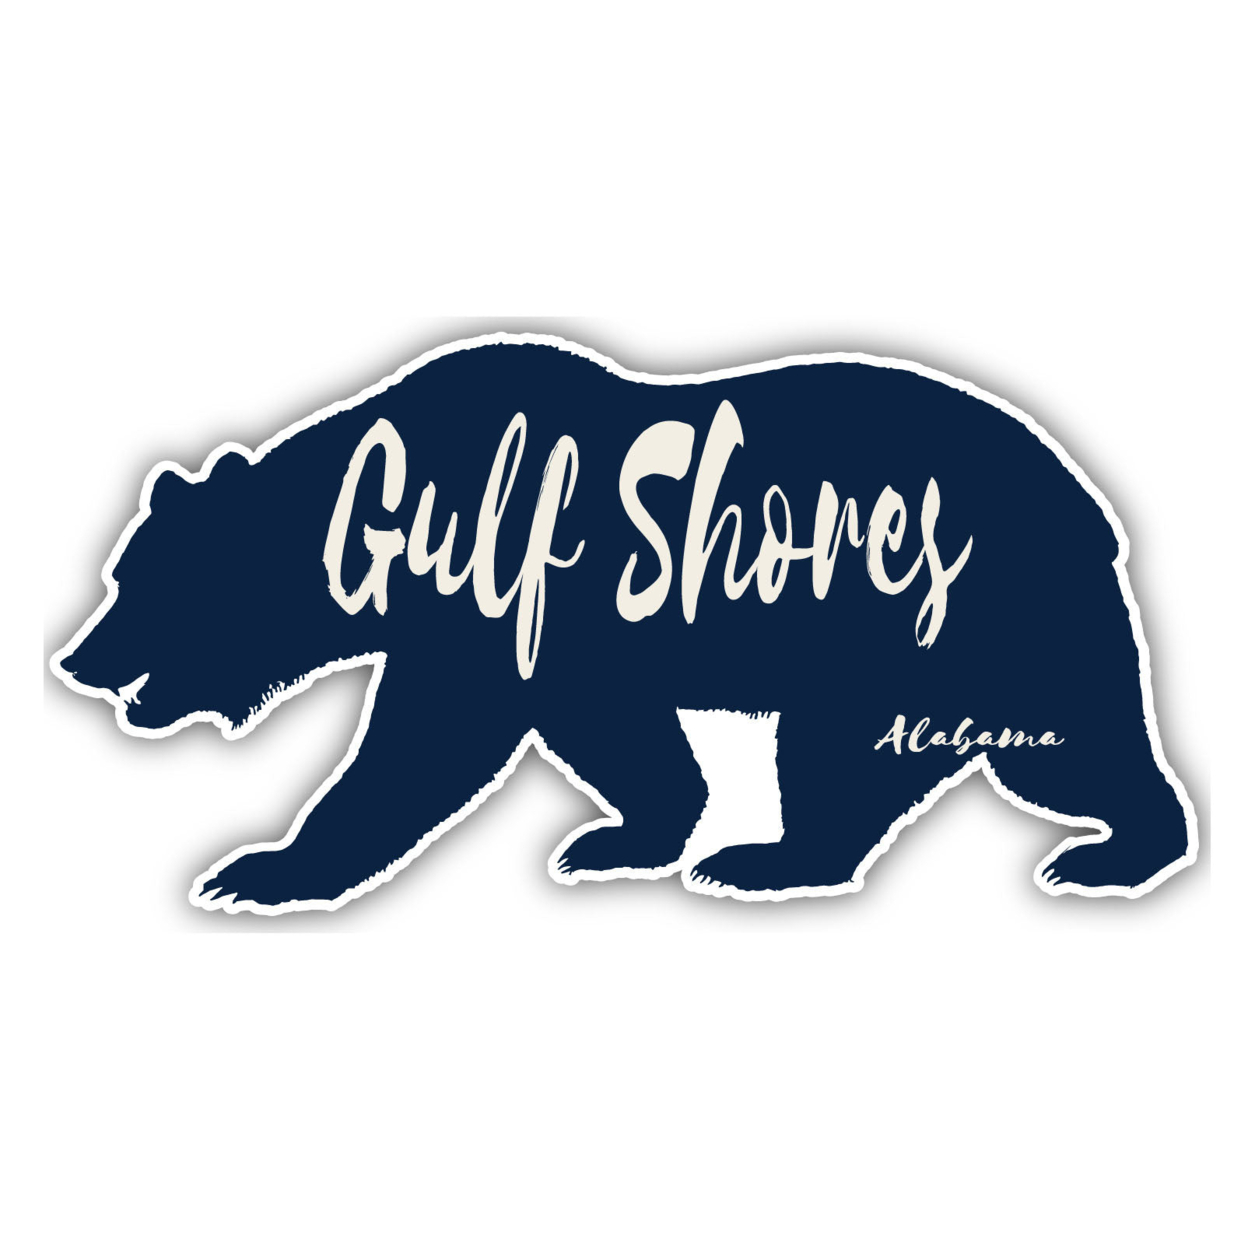 Gulf Shores Alabama Souvenir Decorative Stickers (Choose Theme And Size) - Single Unit, 4-Inch, Camp Life